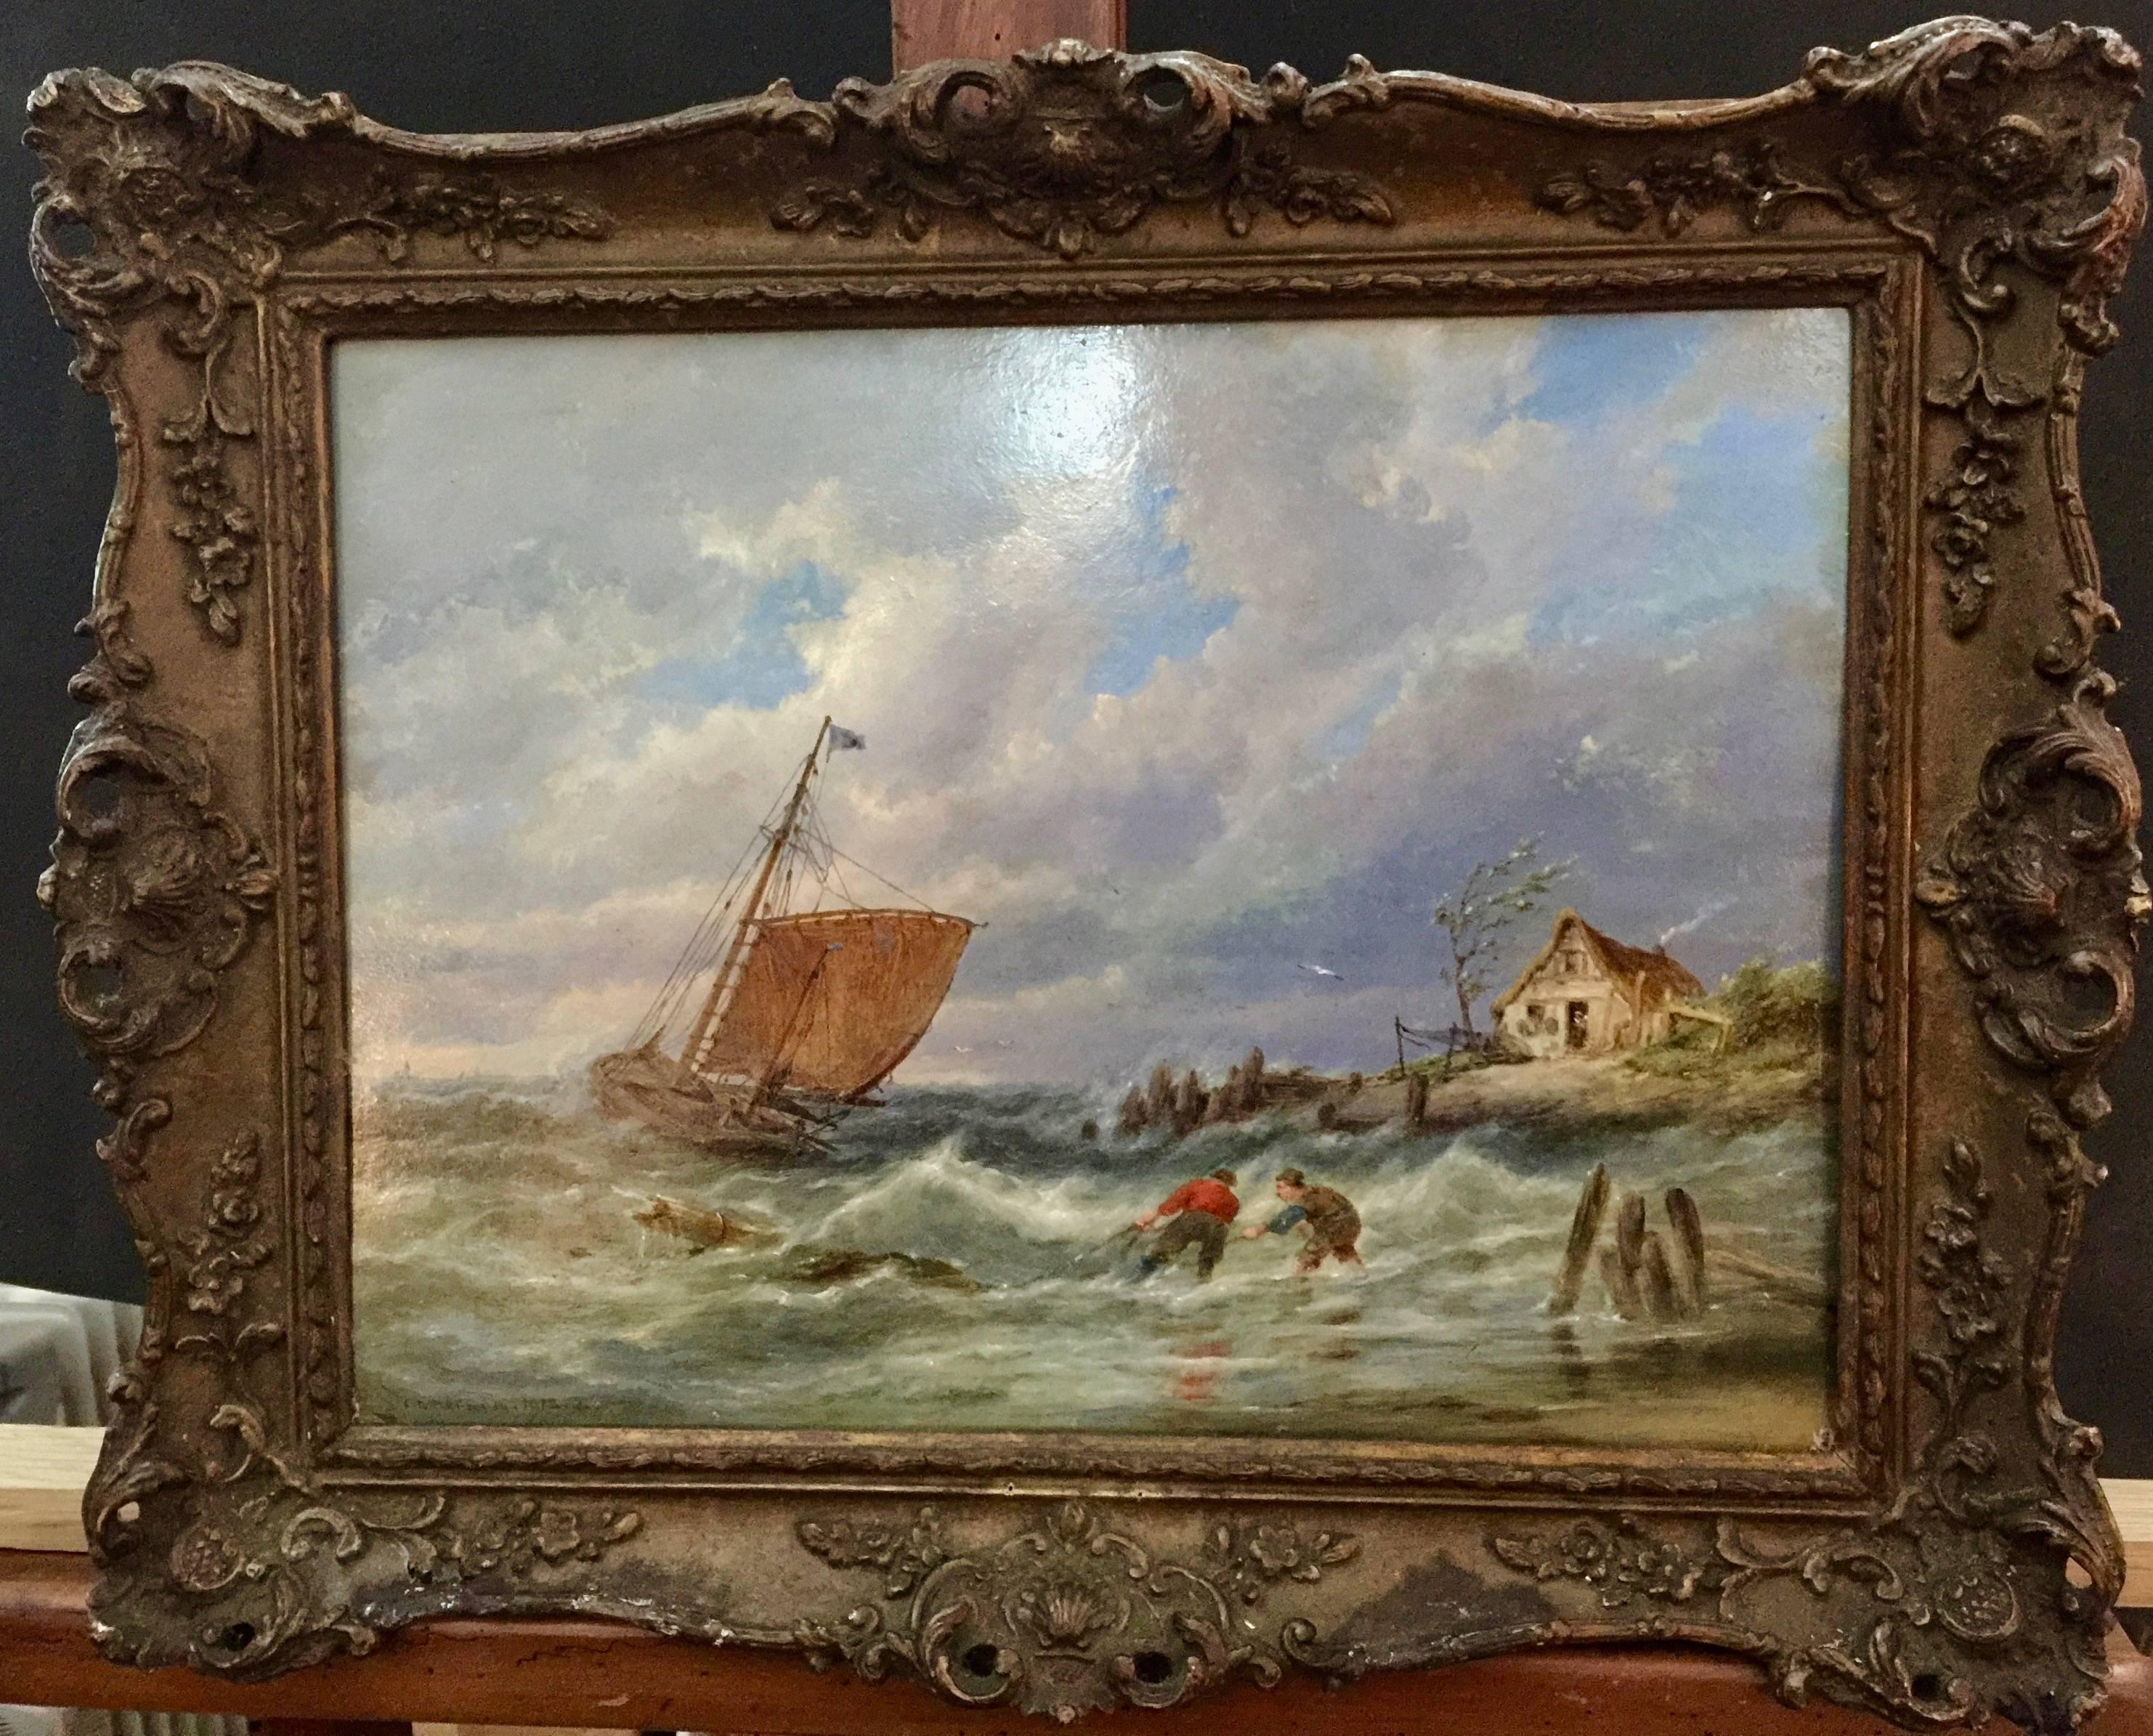 Dommersen, Pieter Cornelis Figurative Painting - Shipping off the Dutch Coastline in Rough Seas